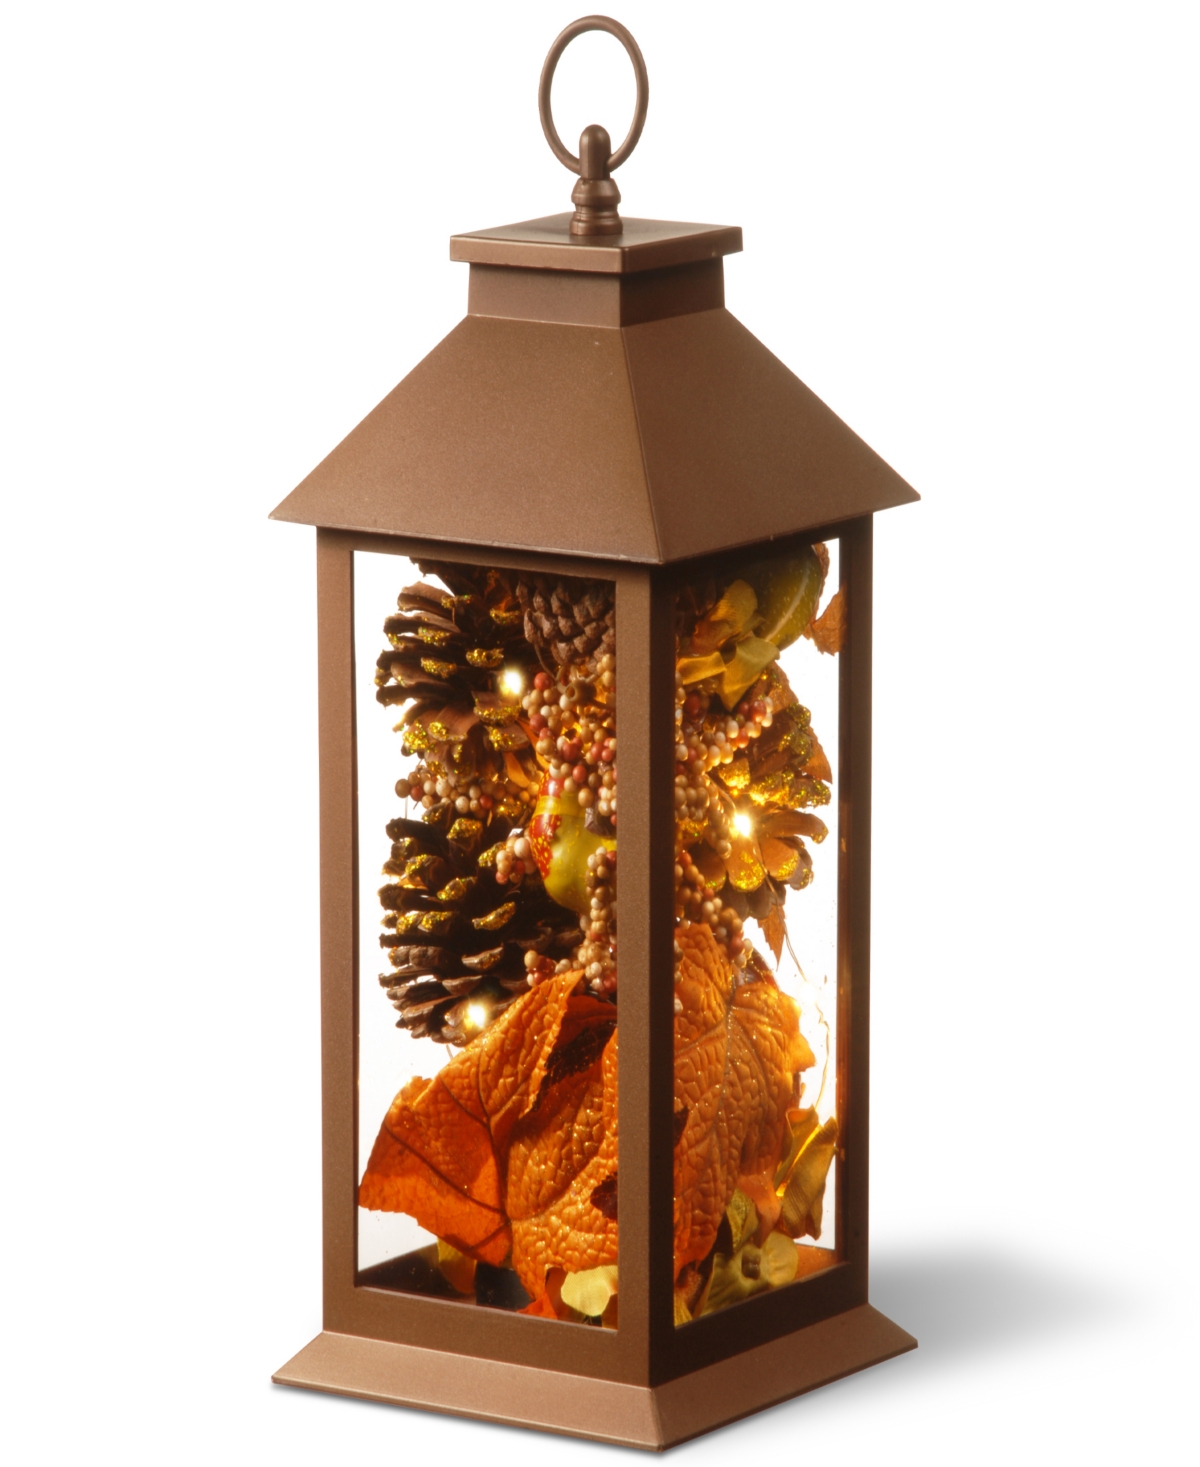 12" Decorative Autumn Lantern with Led Lights - Brown